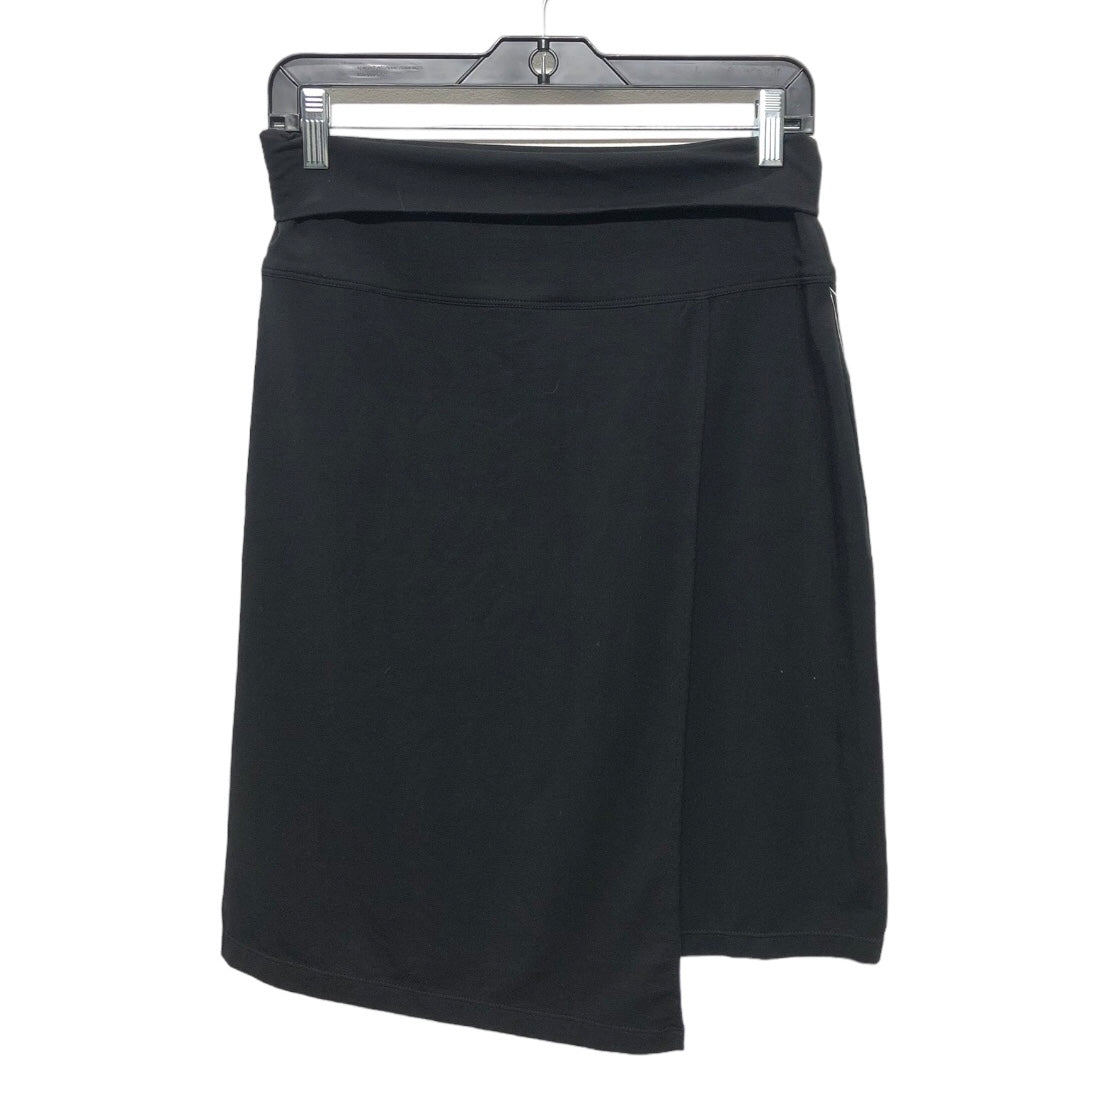 Black Athletic Skirt Athleta, Size S